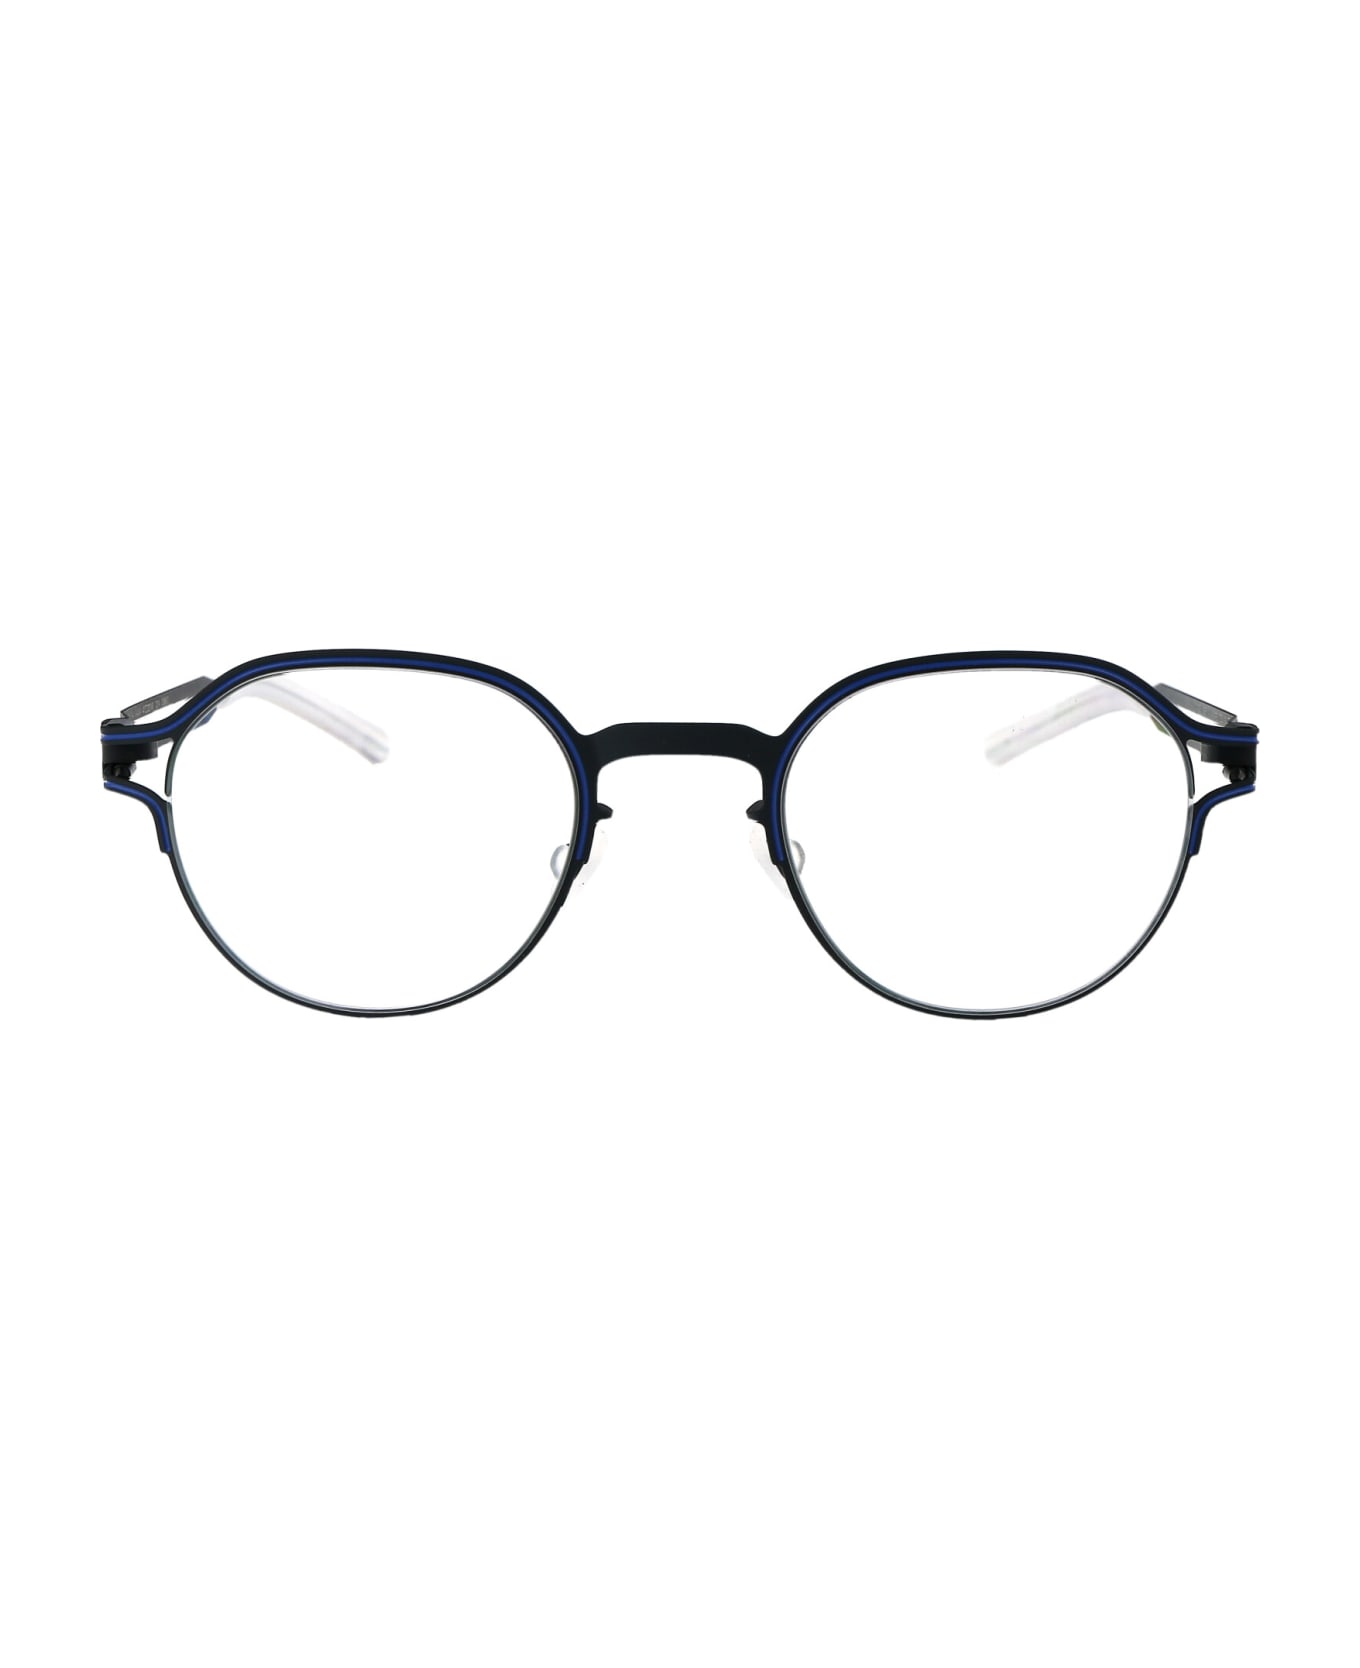 Mykita Vaasa Glasses - 514 Indigo/Yale Blue Clear